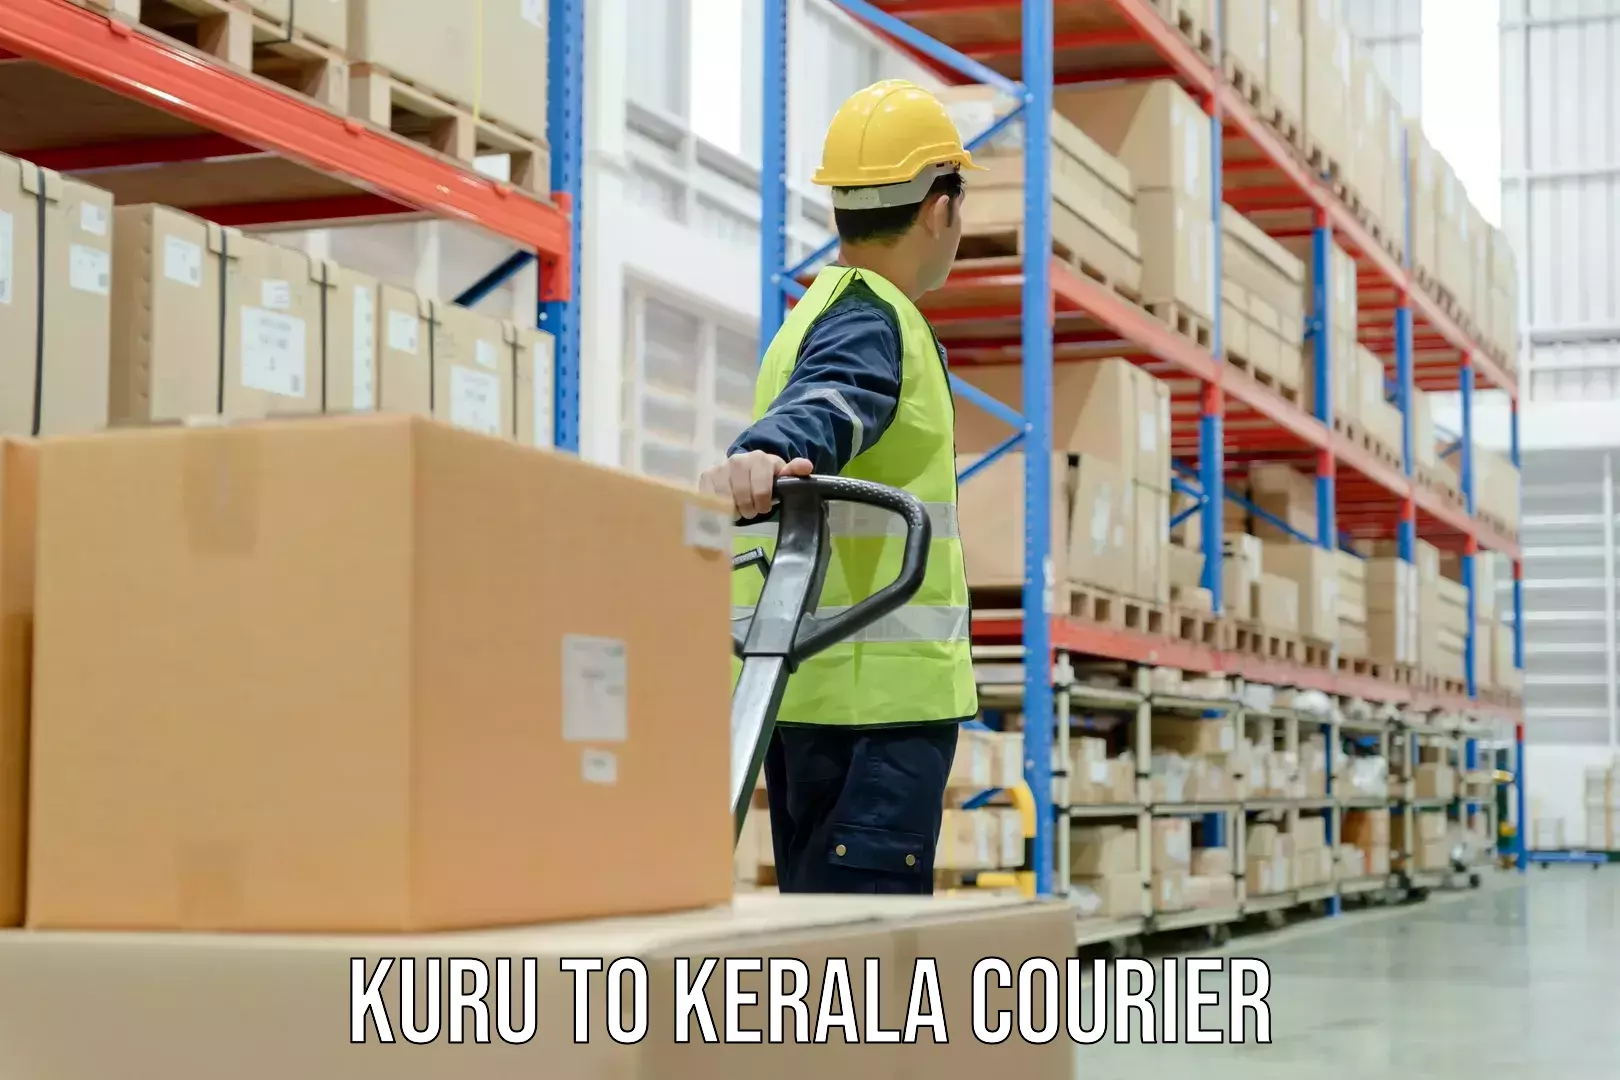 End-to-end delivery Kuru to Kerala